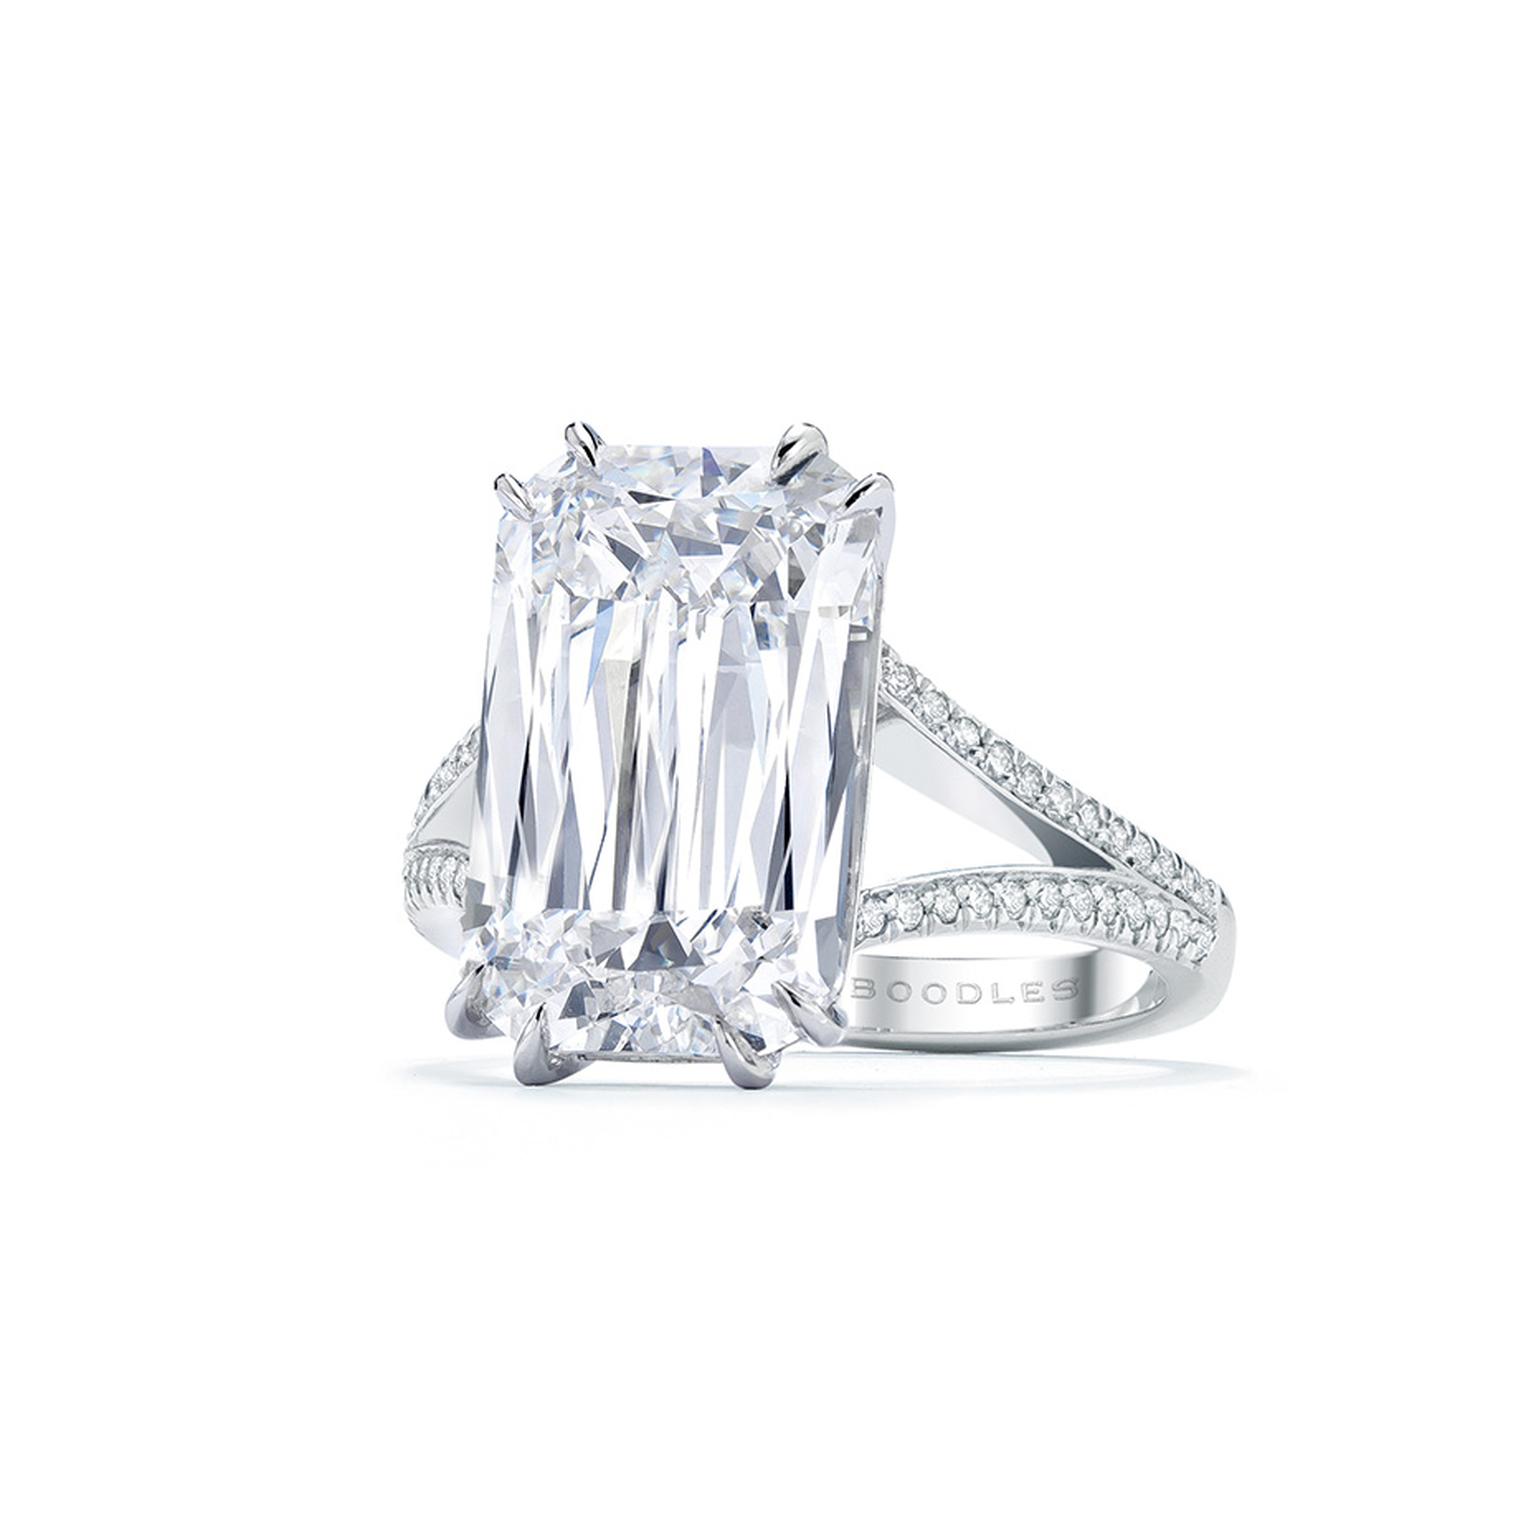 Boodles Ashoka diamond ring